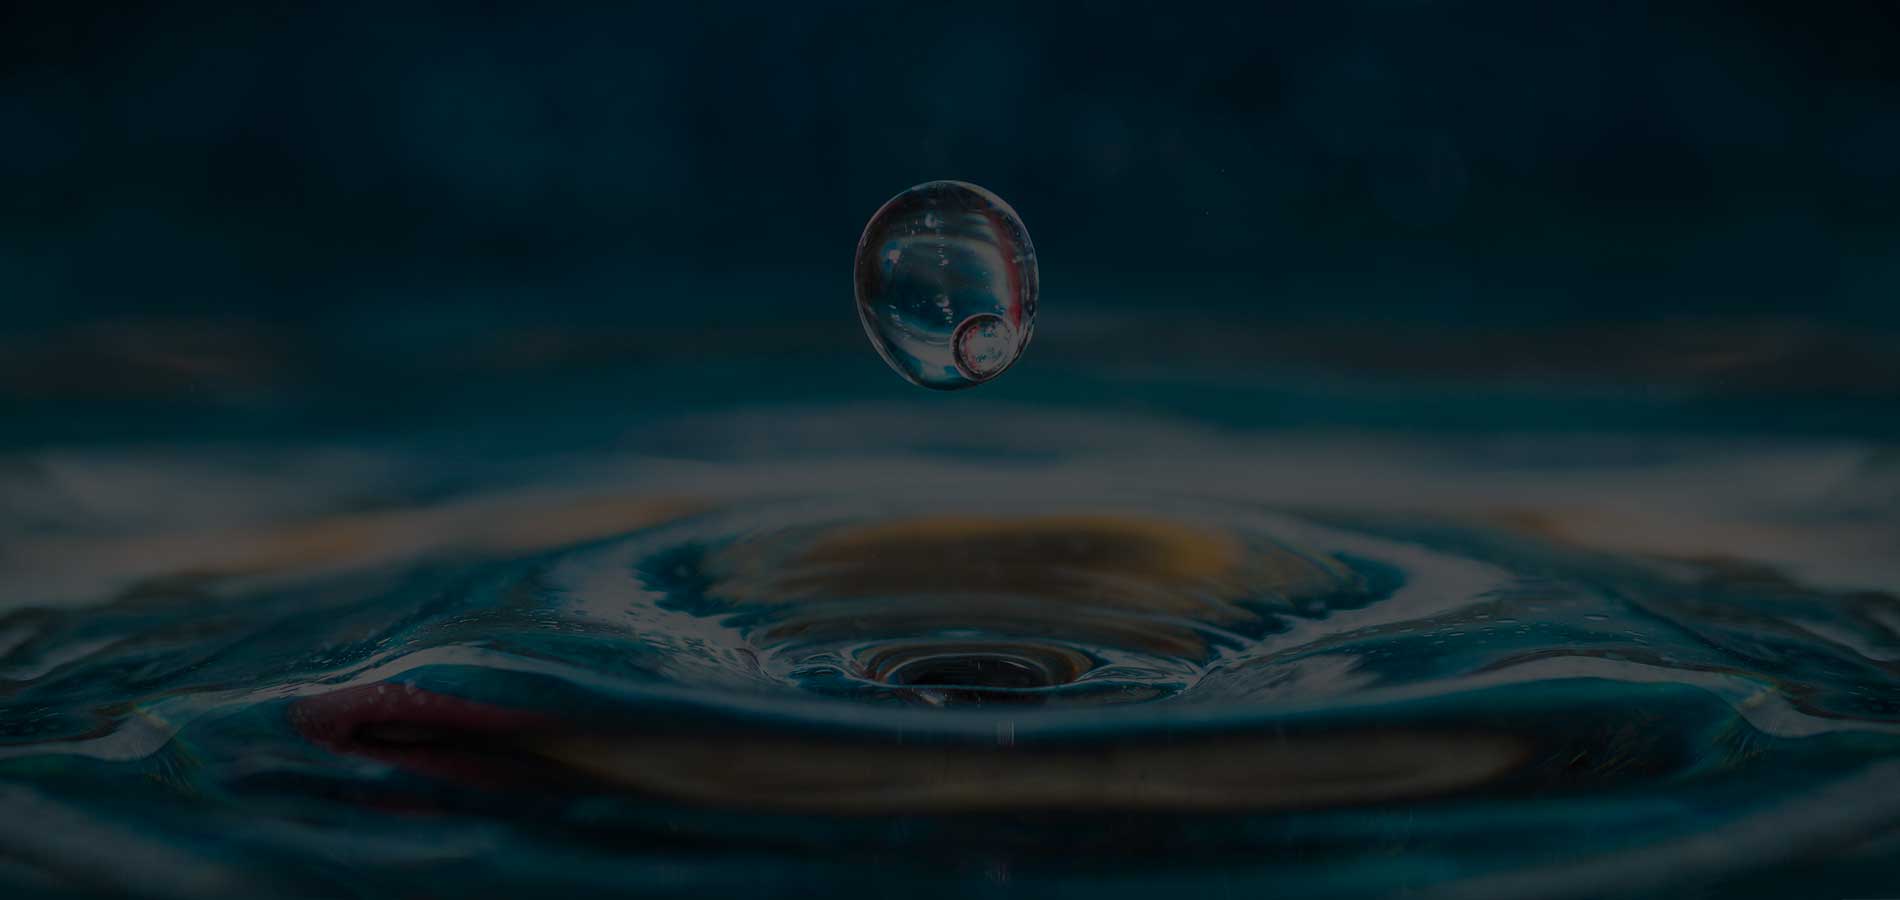 Water-droplet